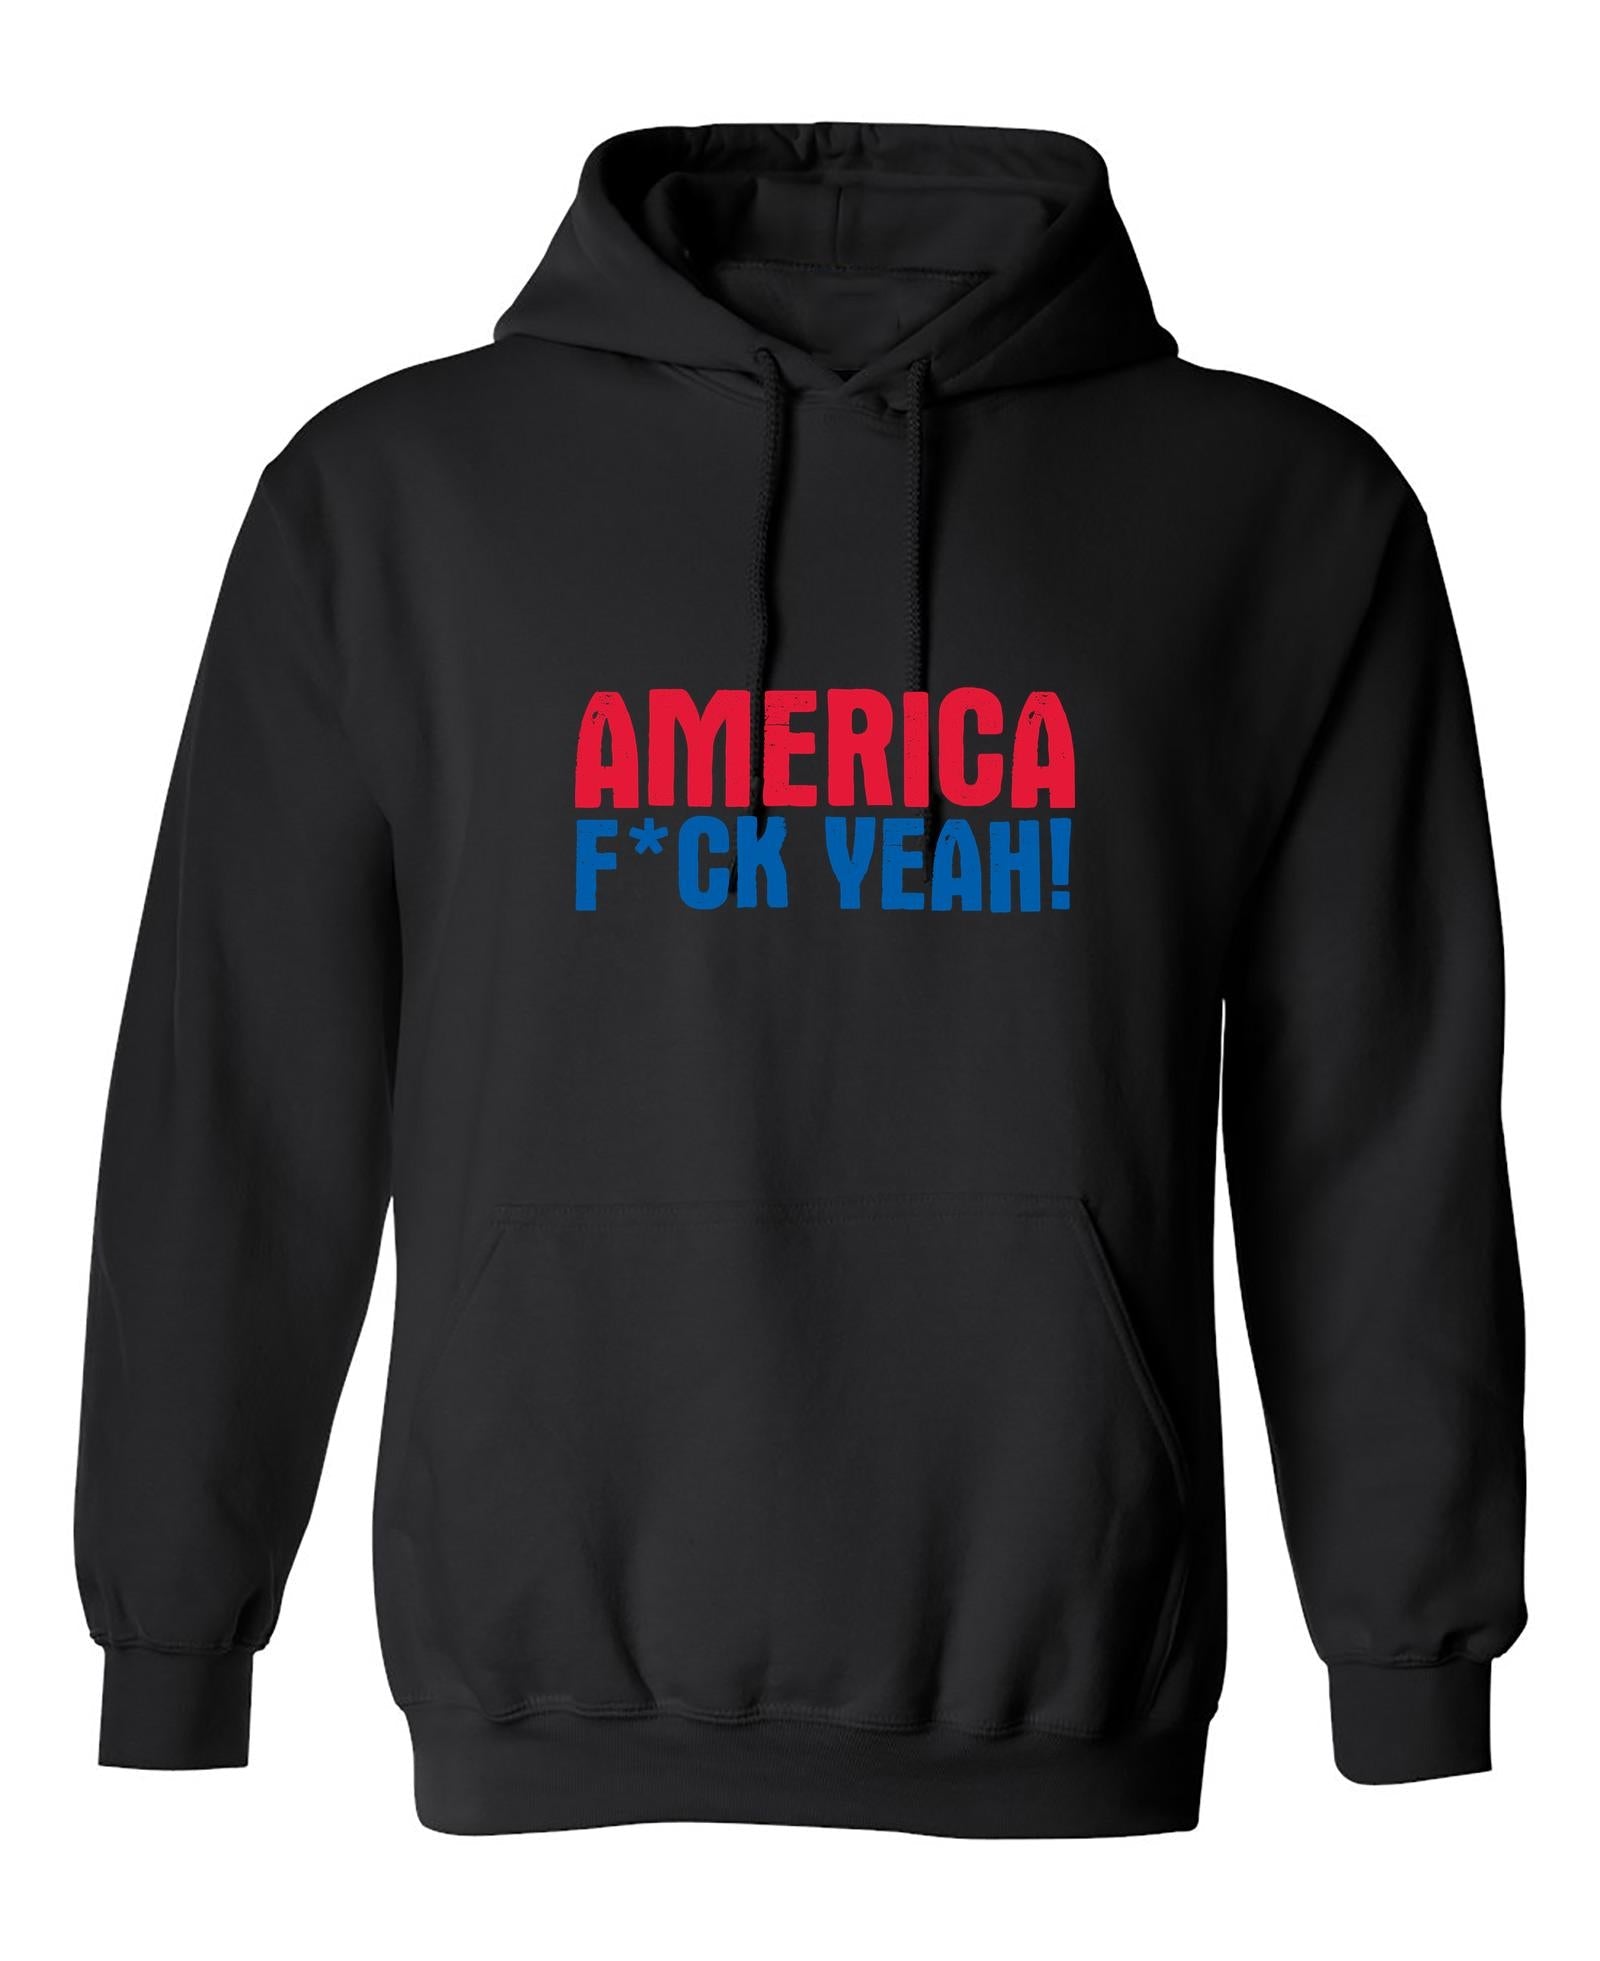 Funny T-Shirts design "AMERICA F*CK YEAH"